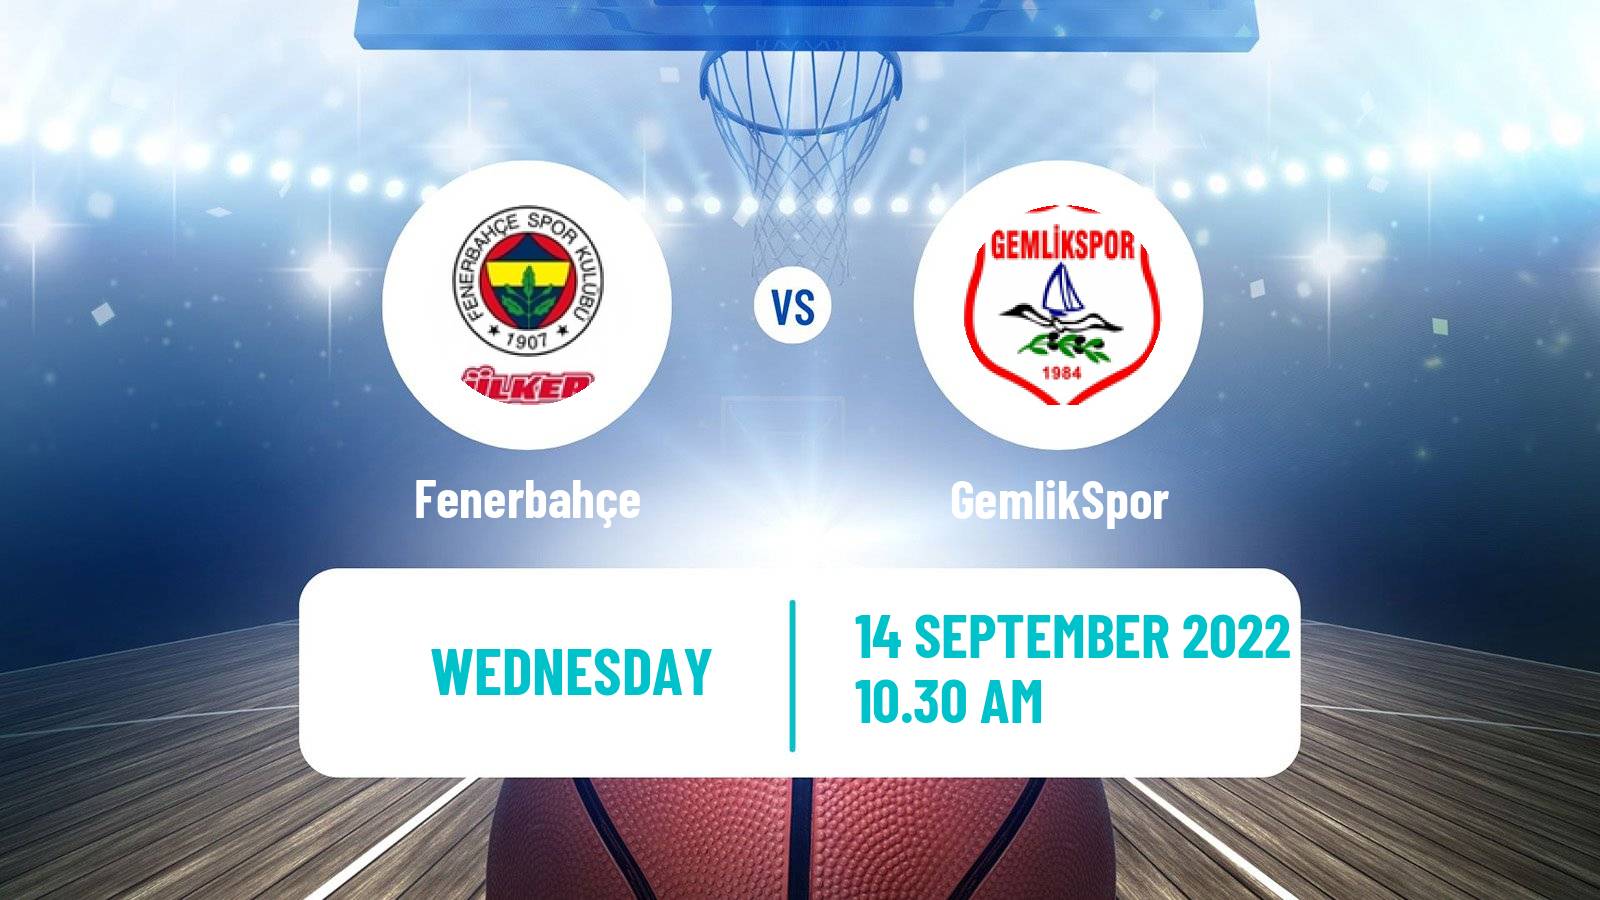 Basketball Club Friendly Basketball Fenerbahçe - GemlikSpor